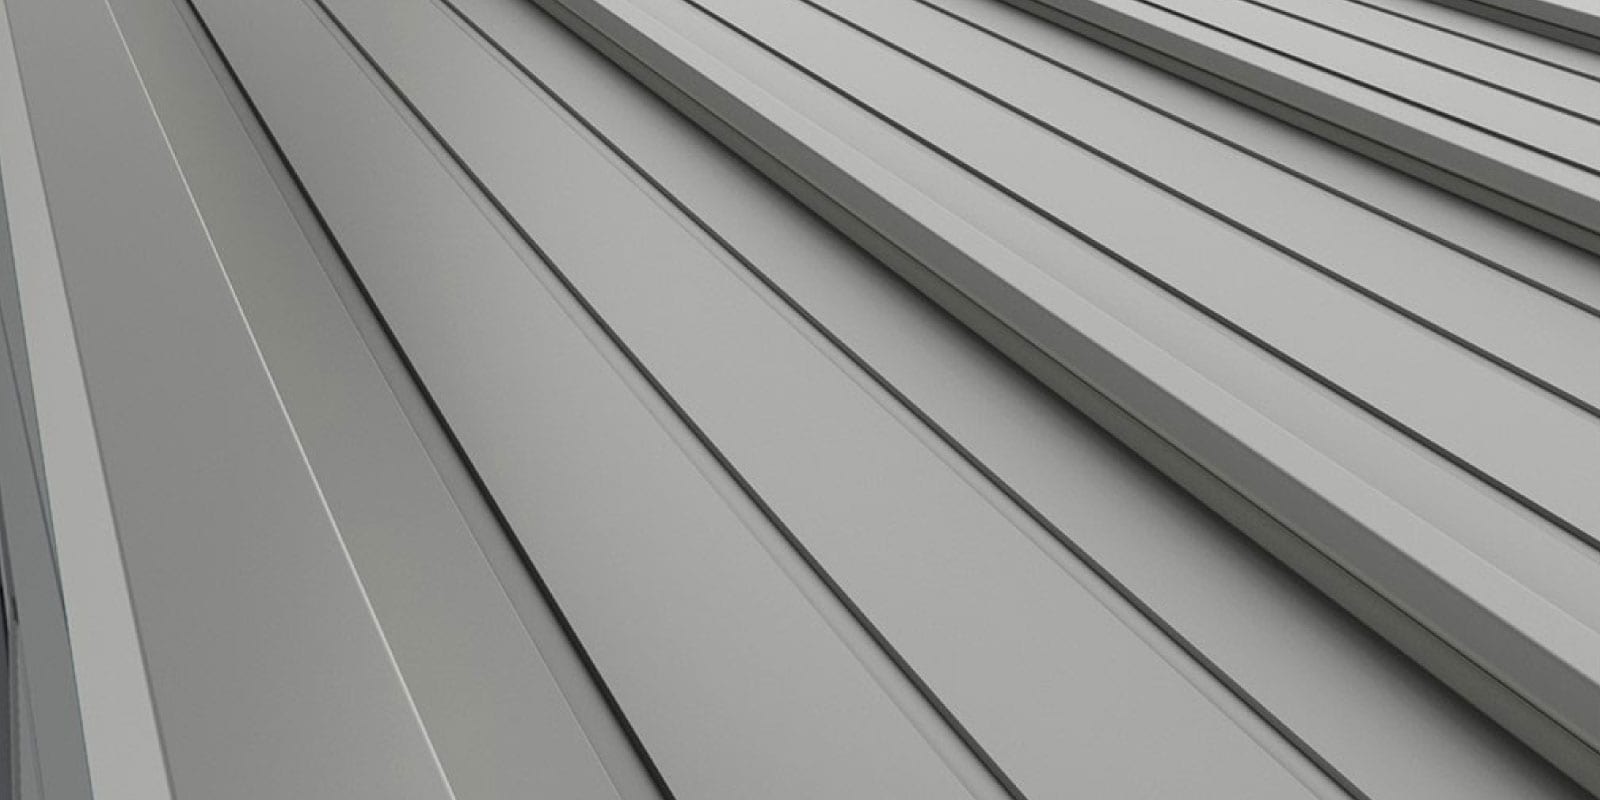 commercial metal roofers sydney